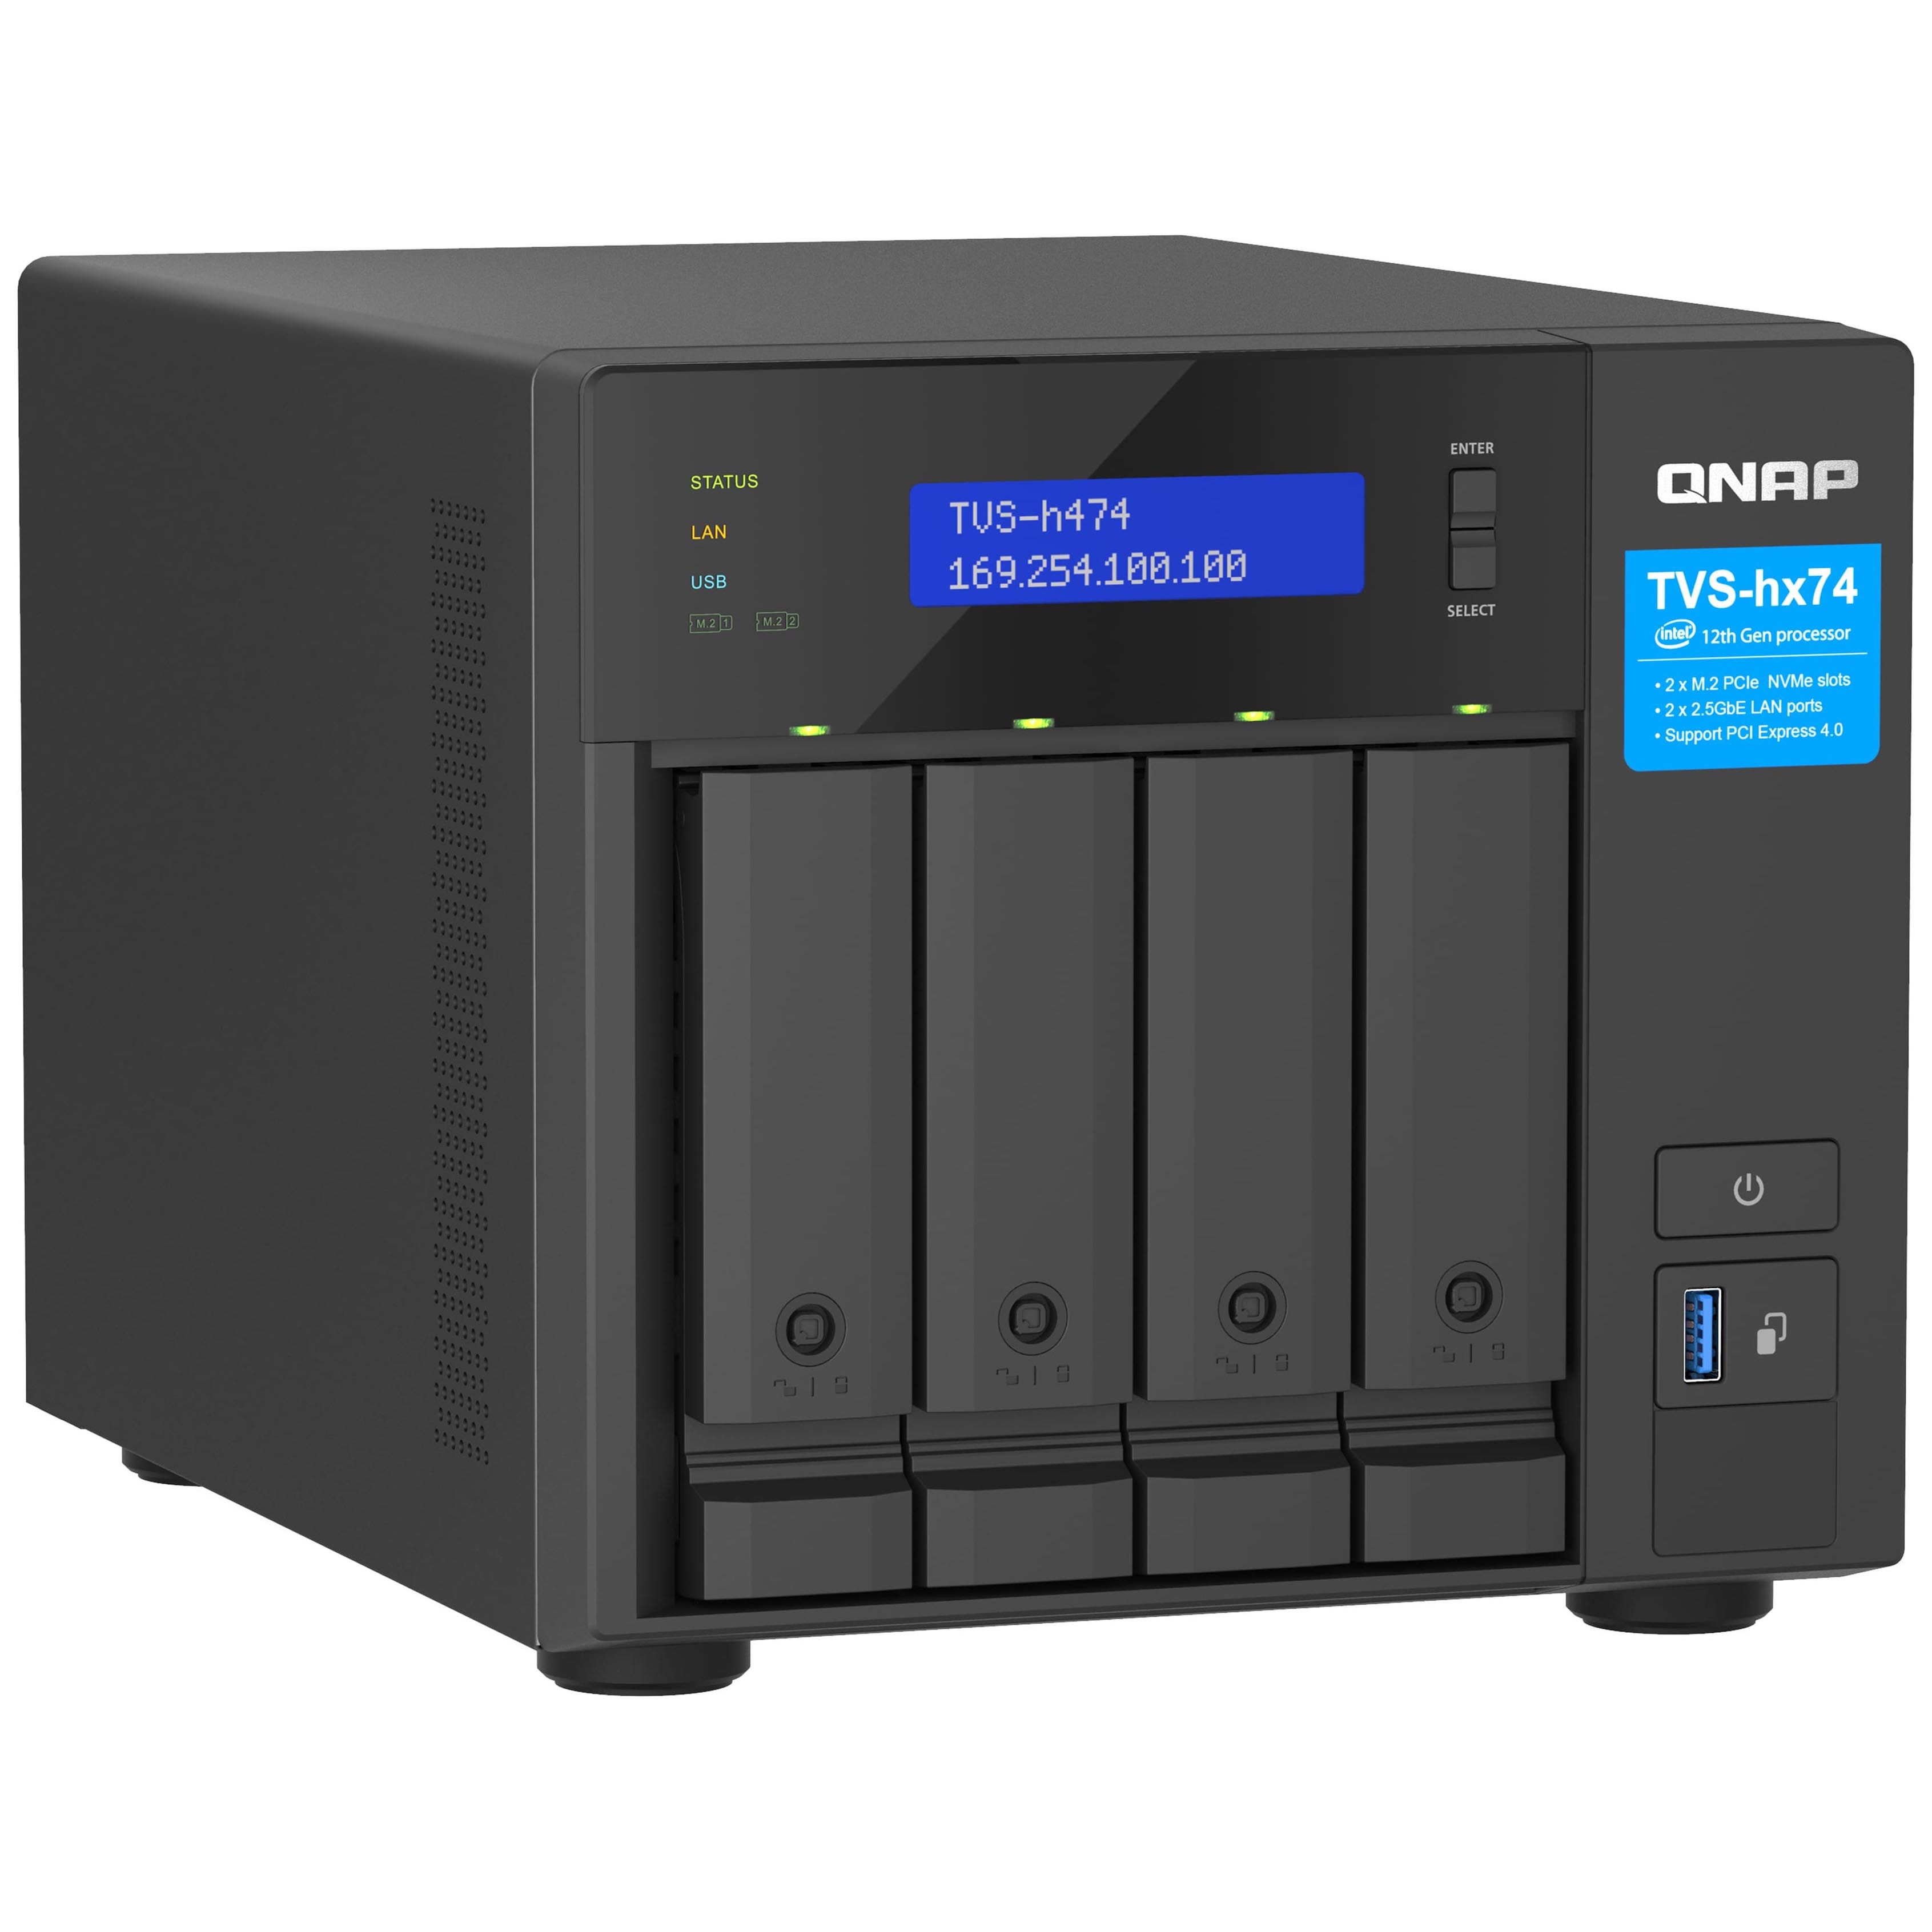 Сетевое хранилище QNAP TVS-h474, 4 отсека, 8Гб DDR4, без дисков, черный сетевое хранилище без дисков qnap tvs 675 8g